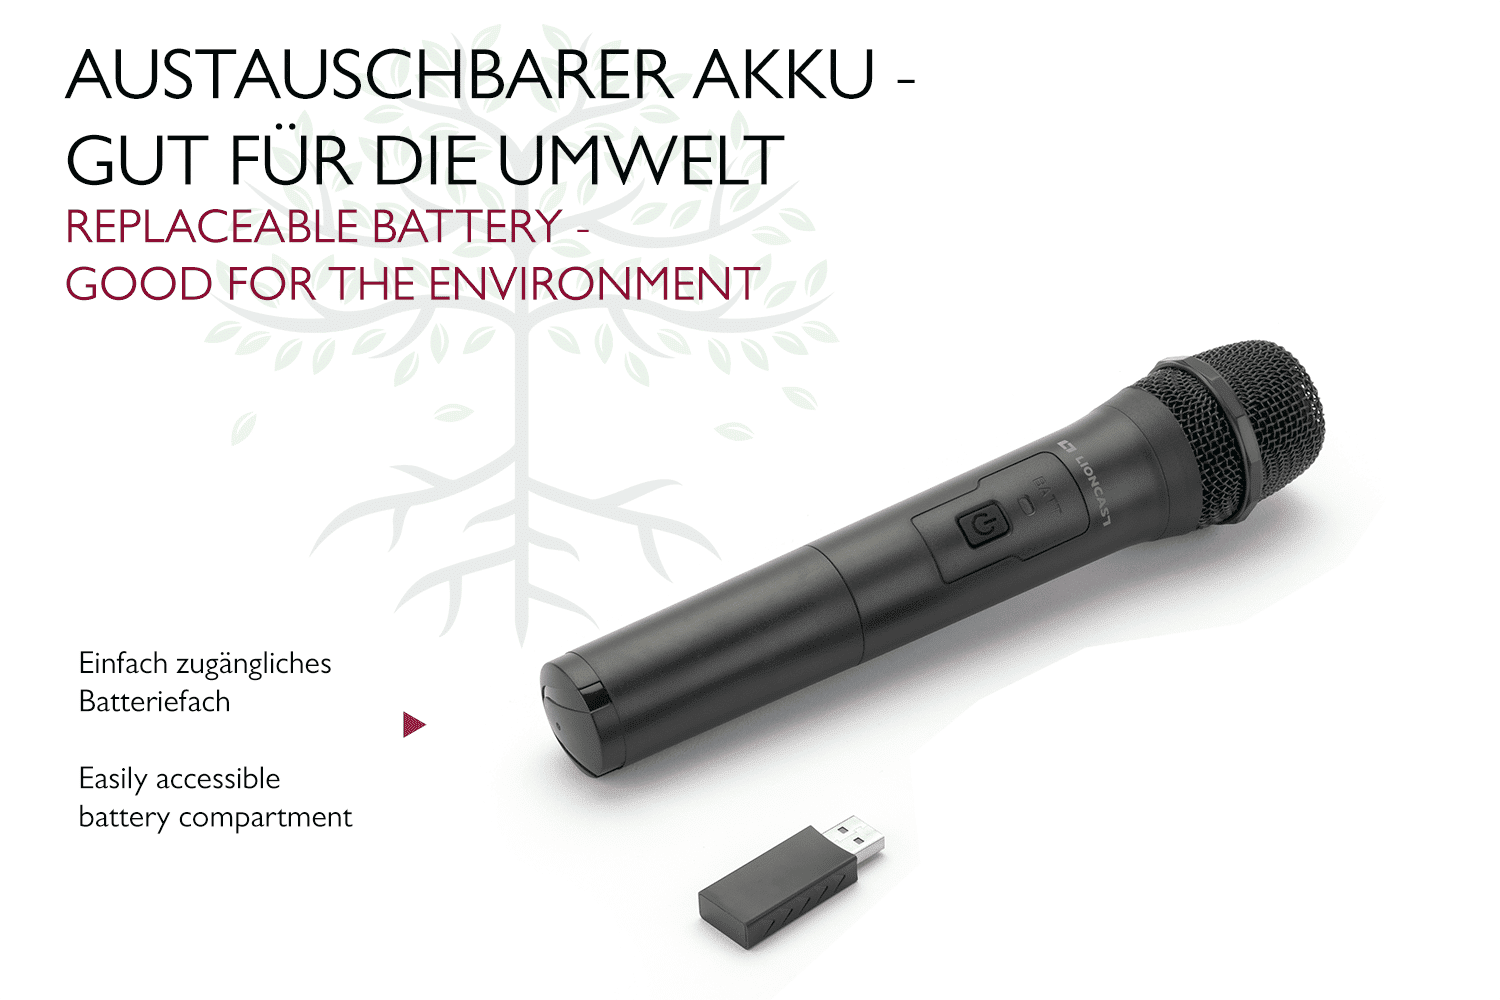 Lioncast Wireless Mikrofon für Karaoke (2er Set) - B-Ware